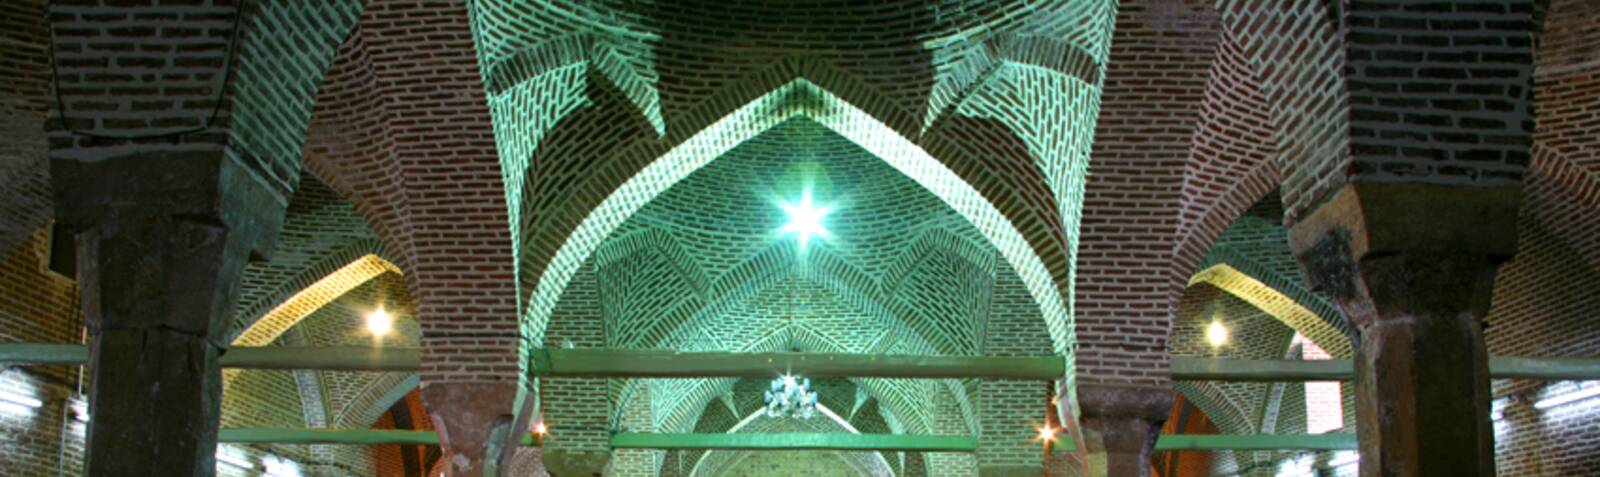 мечеть Джаме Махабад